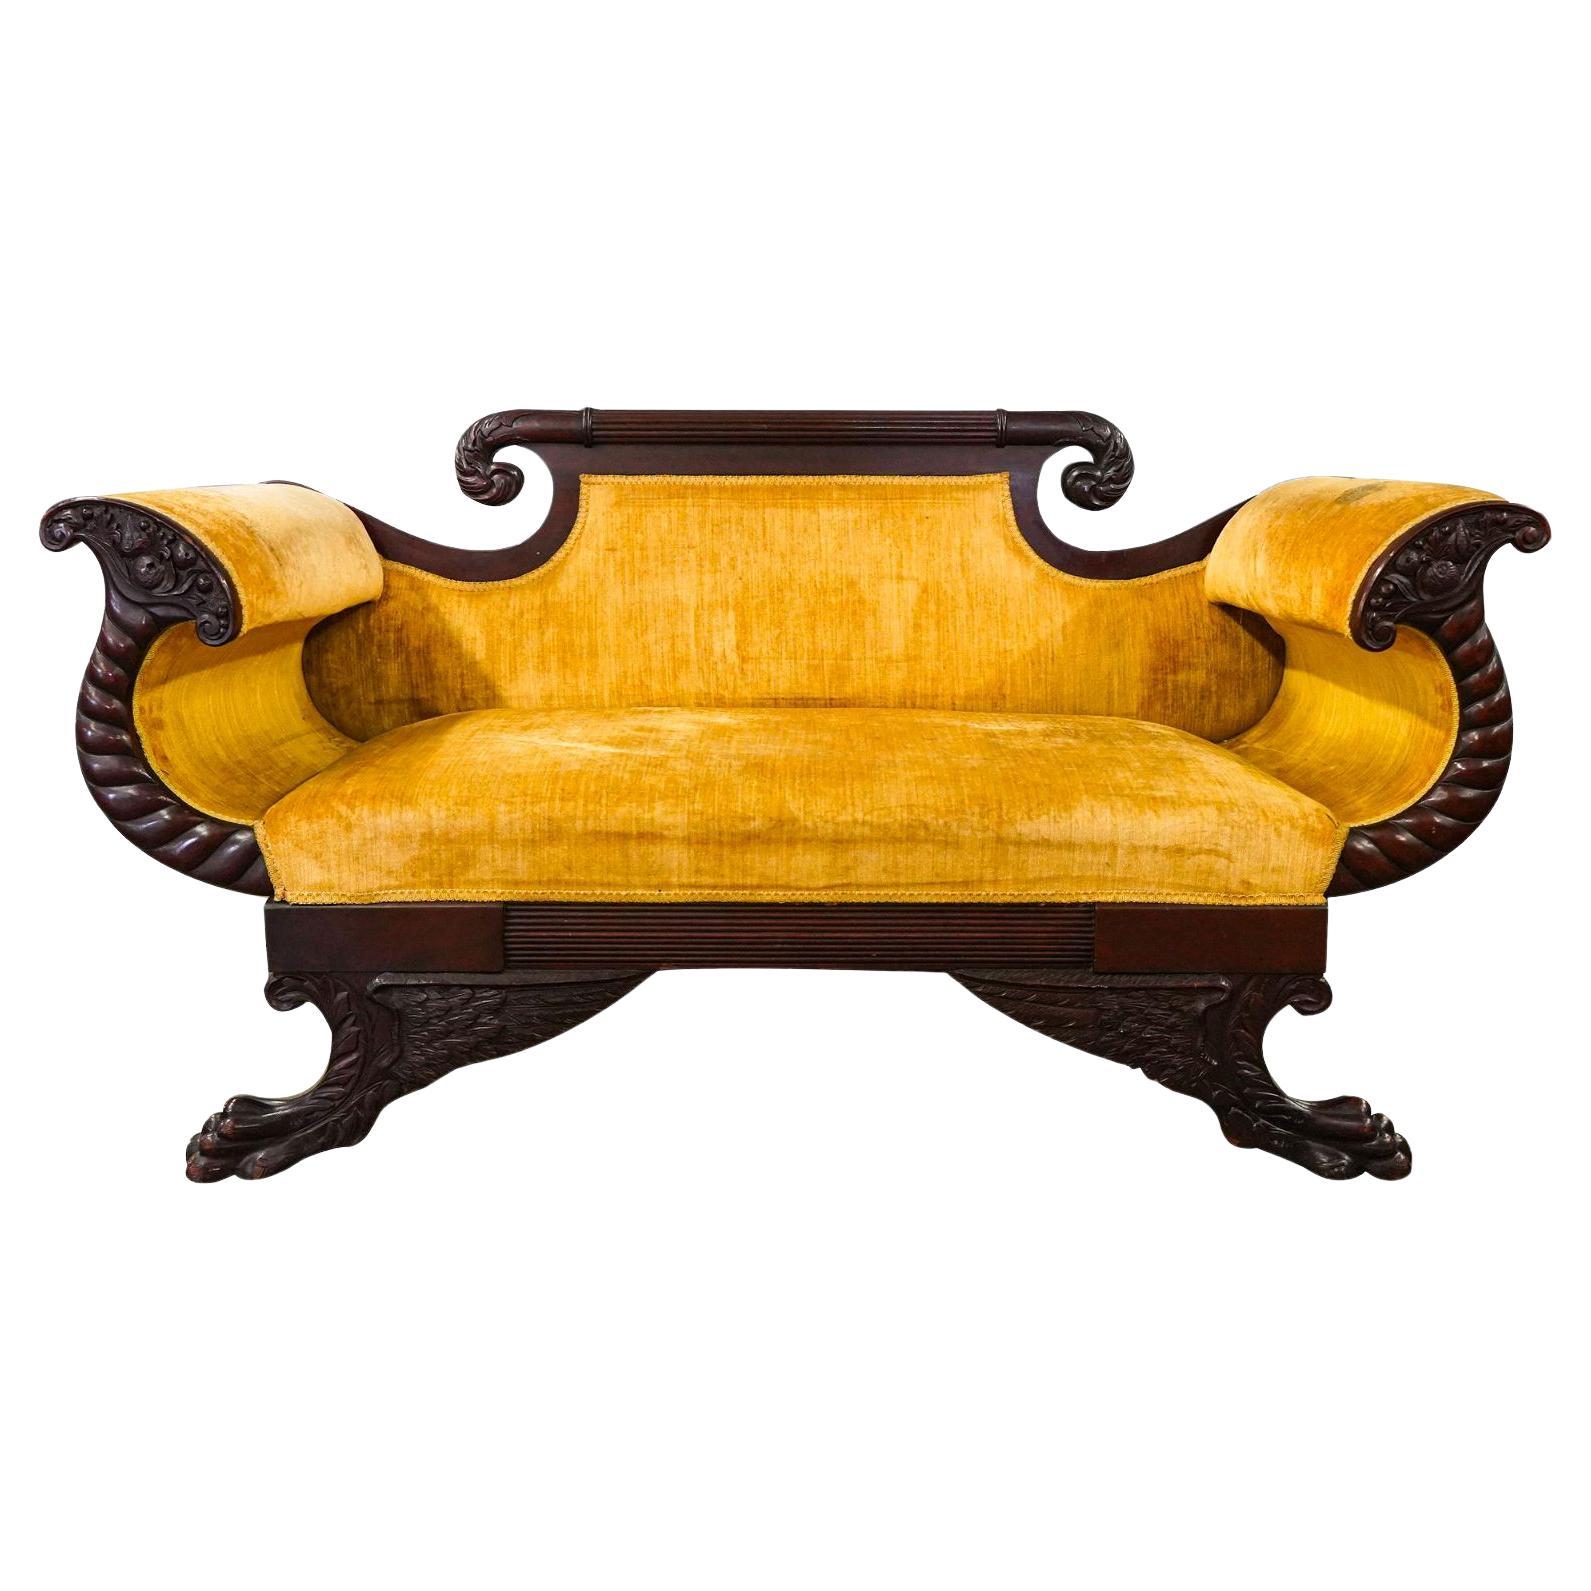 Antikes, hochgeschnitztes Mahagoni-Sofa aus der amerikanischen Federal-Periode, um 1800